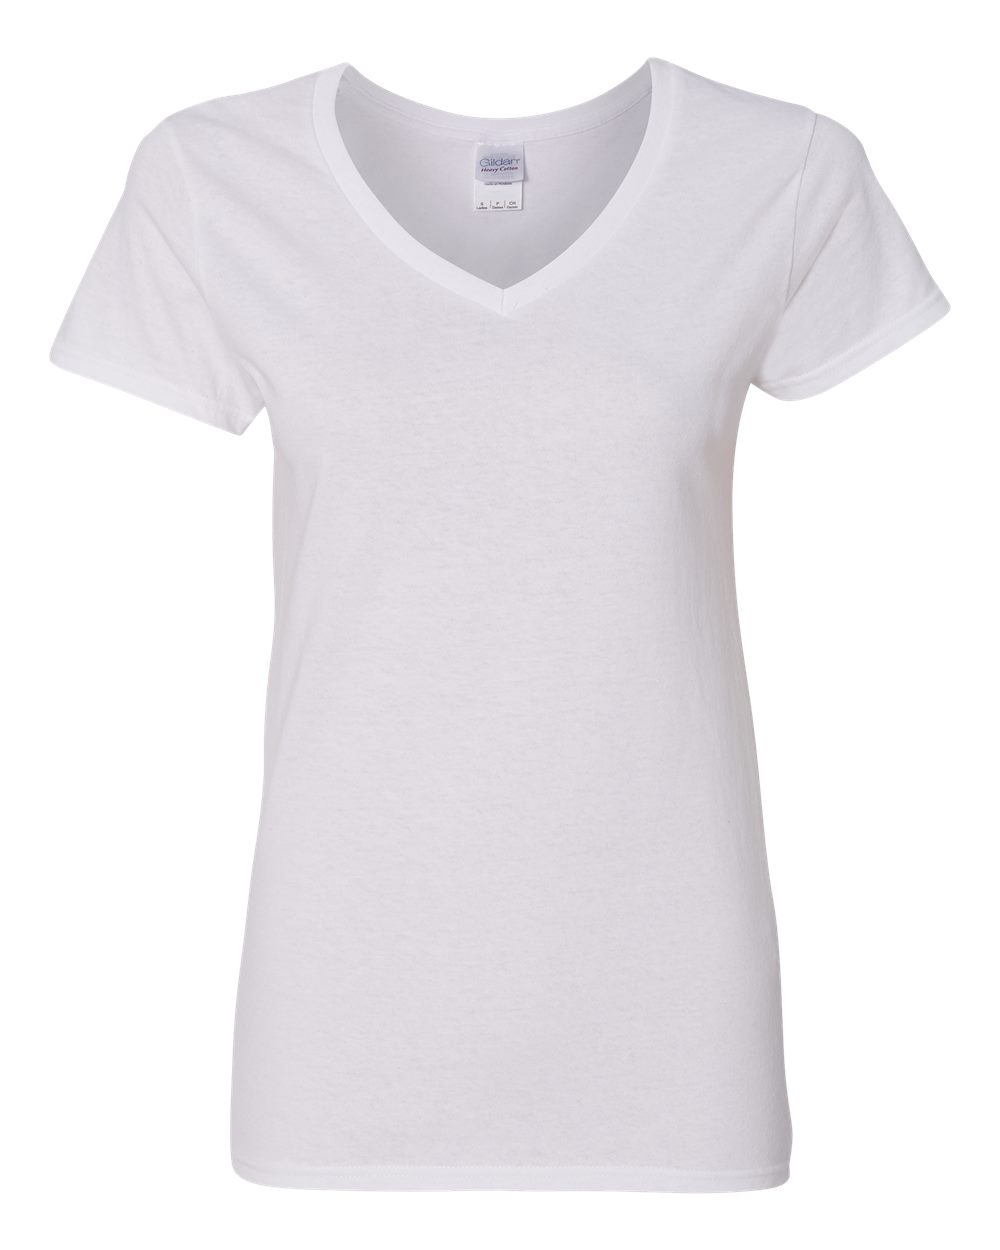 Women's T-Shirts, Cotton, V-Neck & More